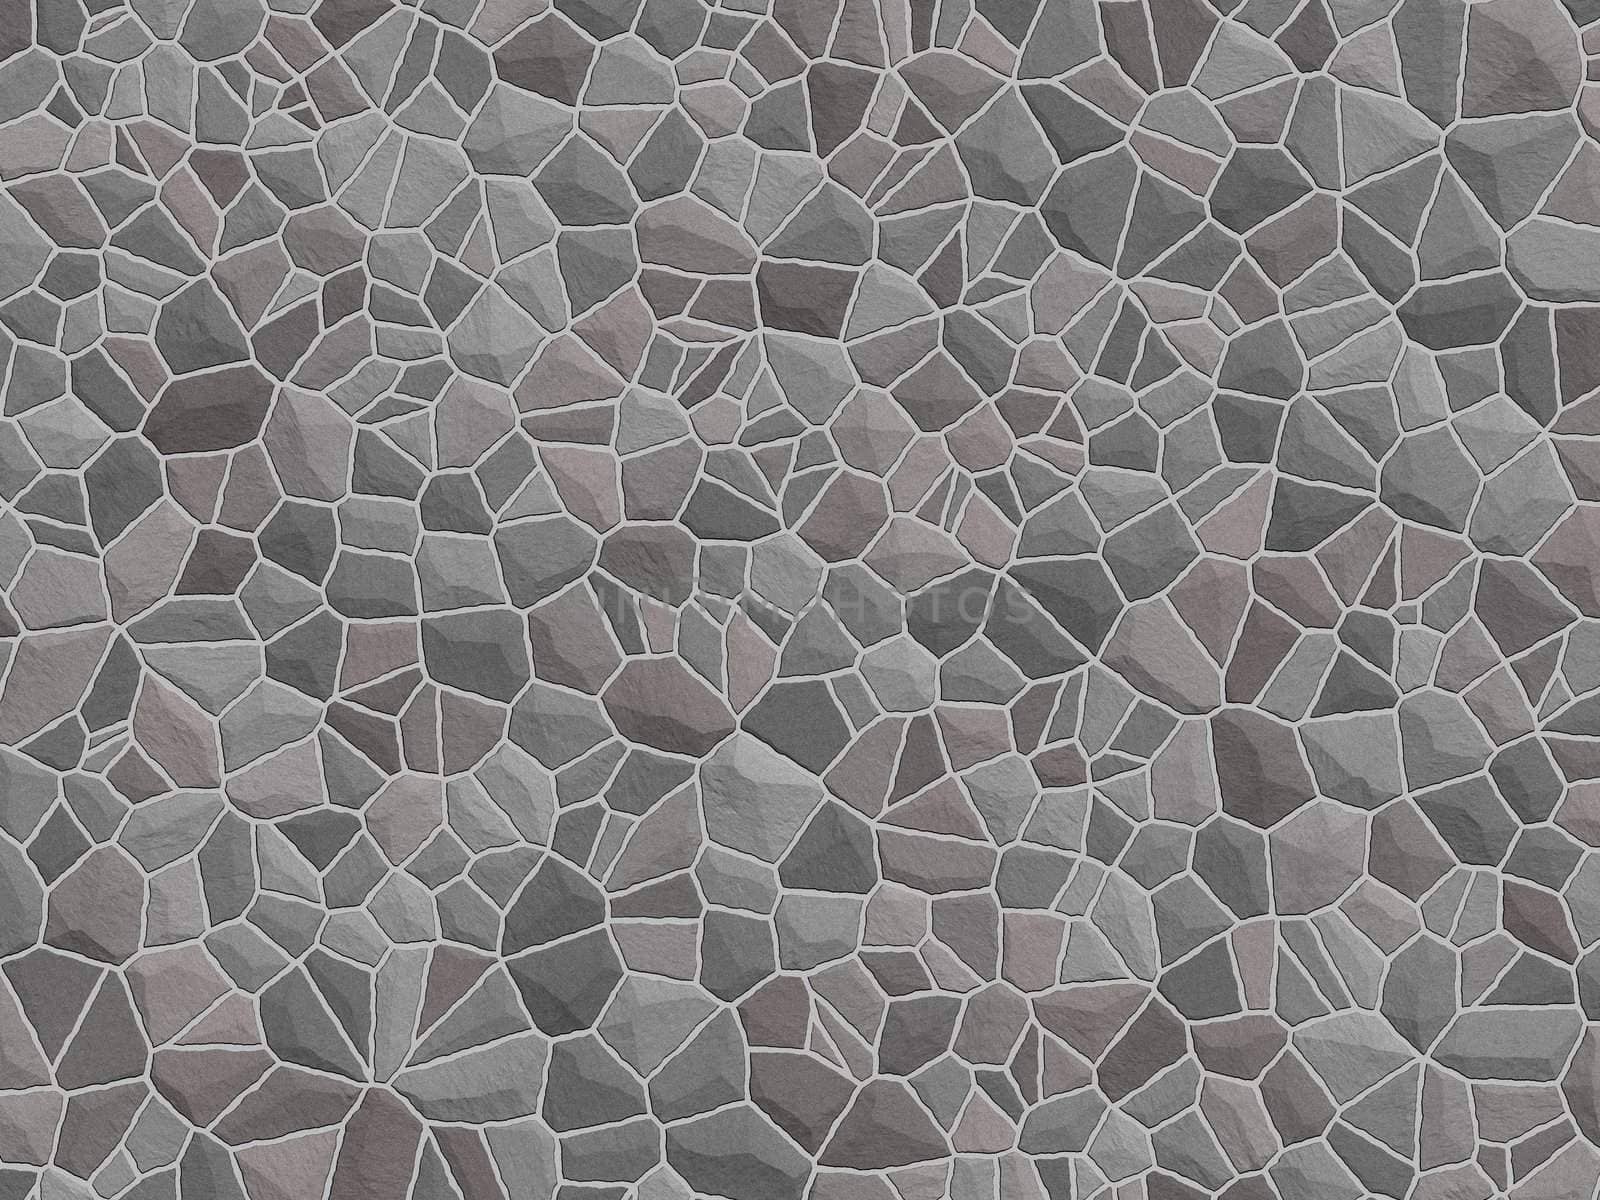  Texture stone sherd floor by peromarketing